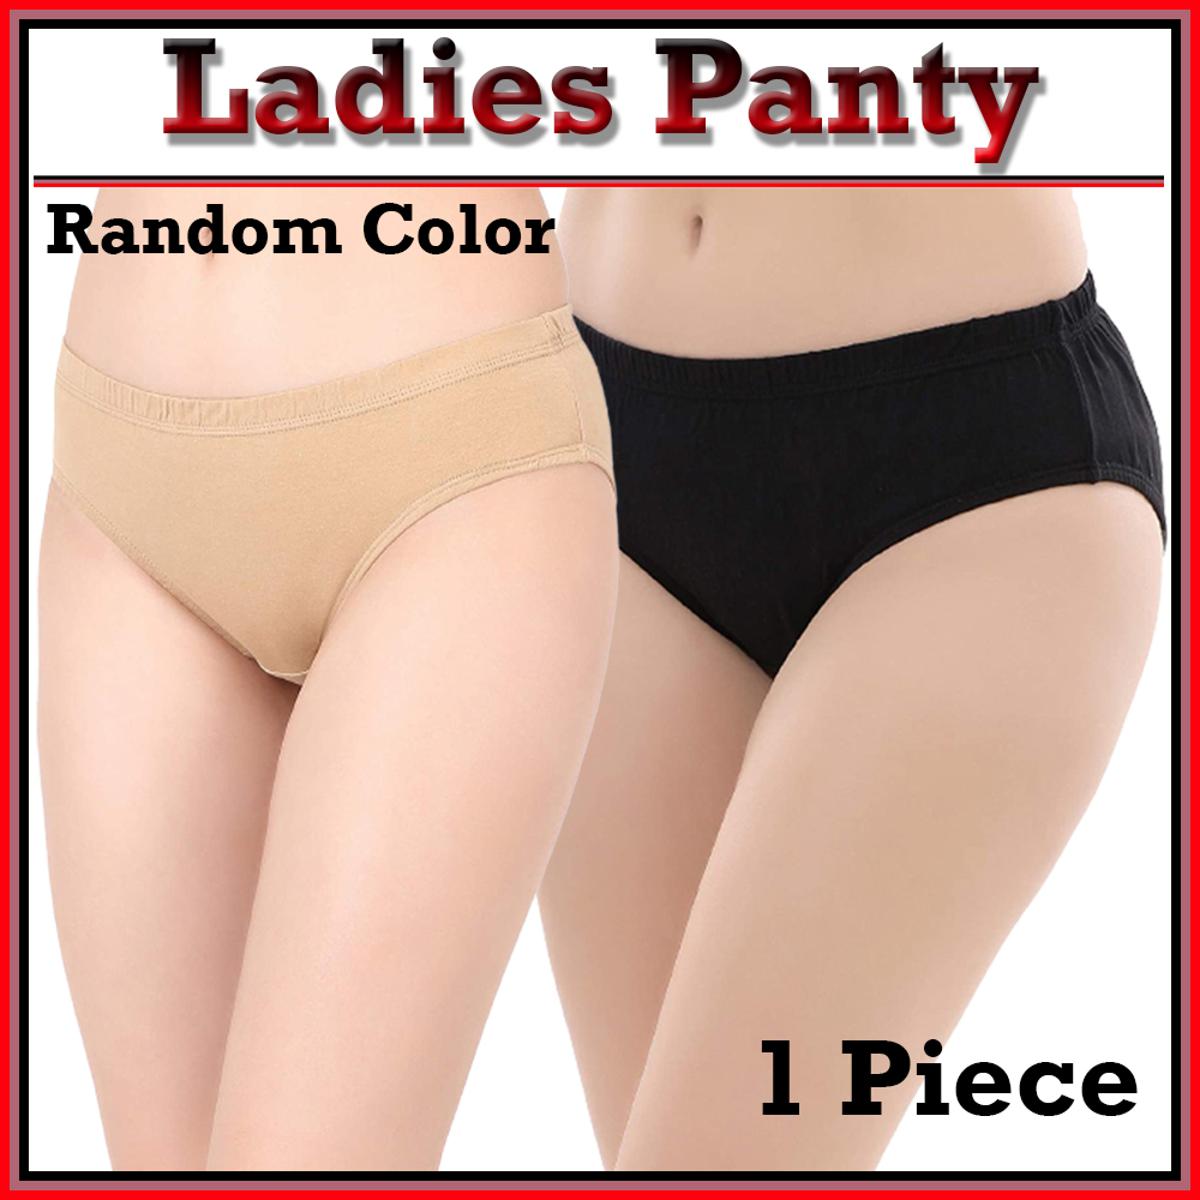 Panty Women Underwear per piece. Plain for ladies stretch ( Random